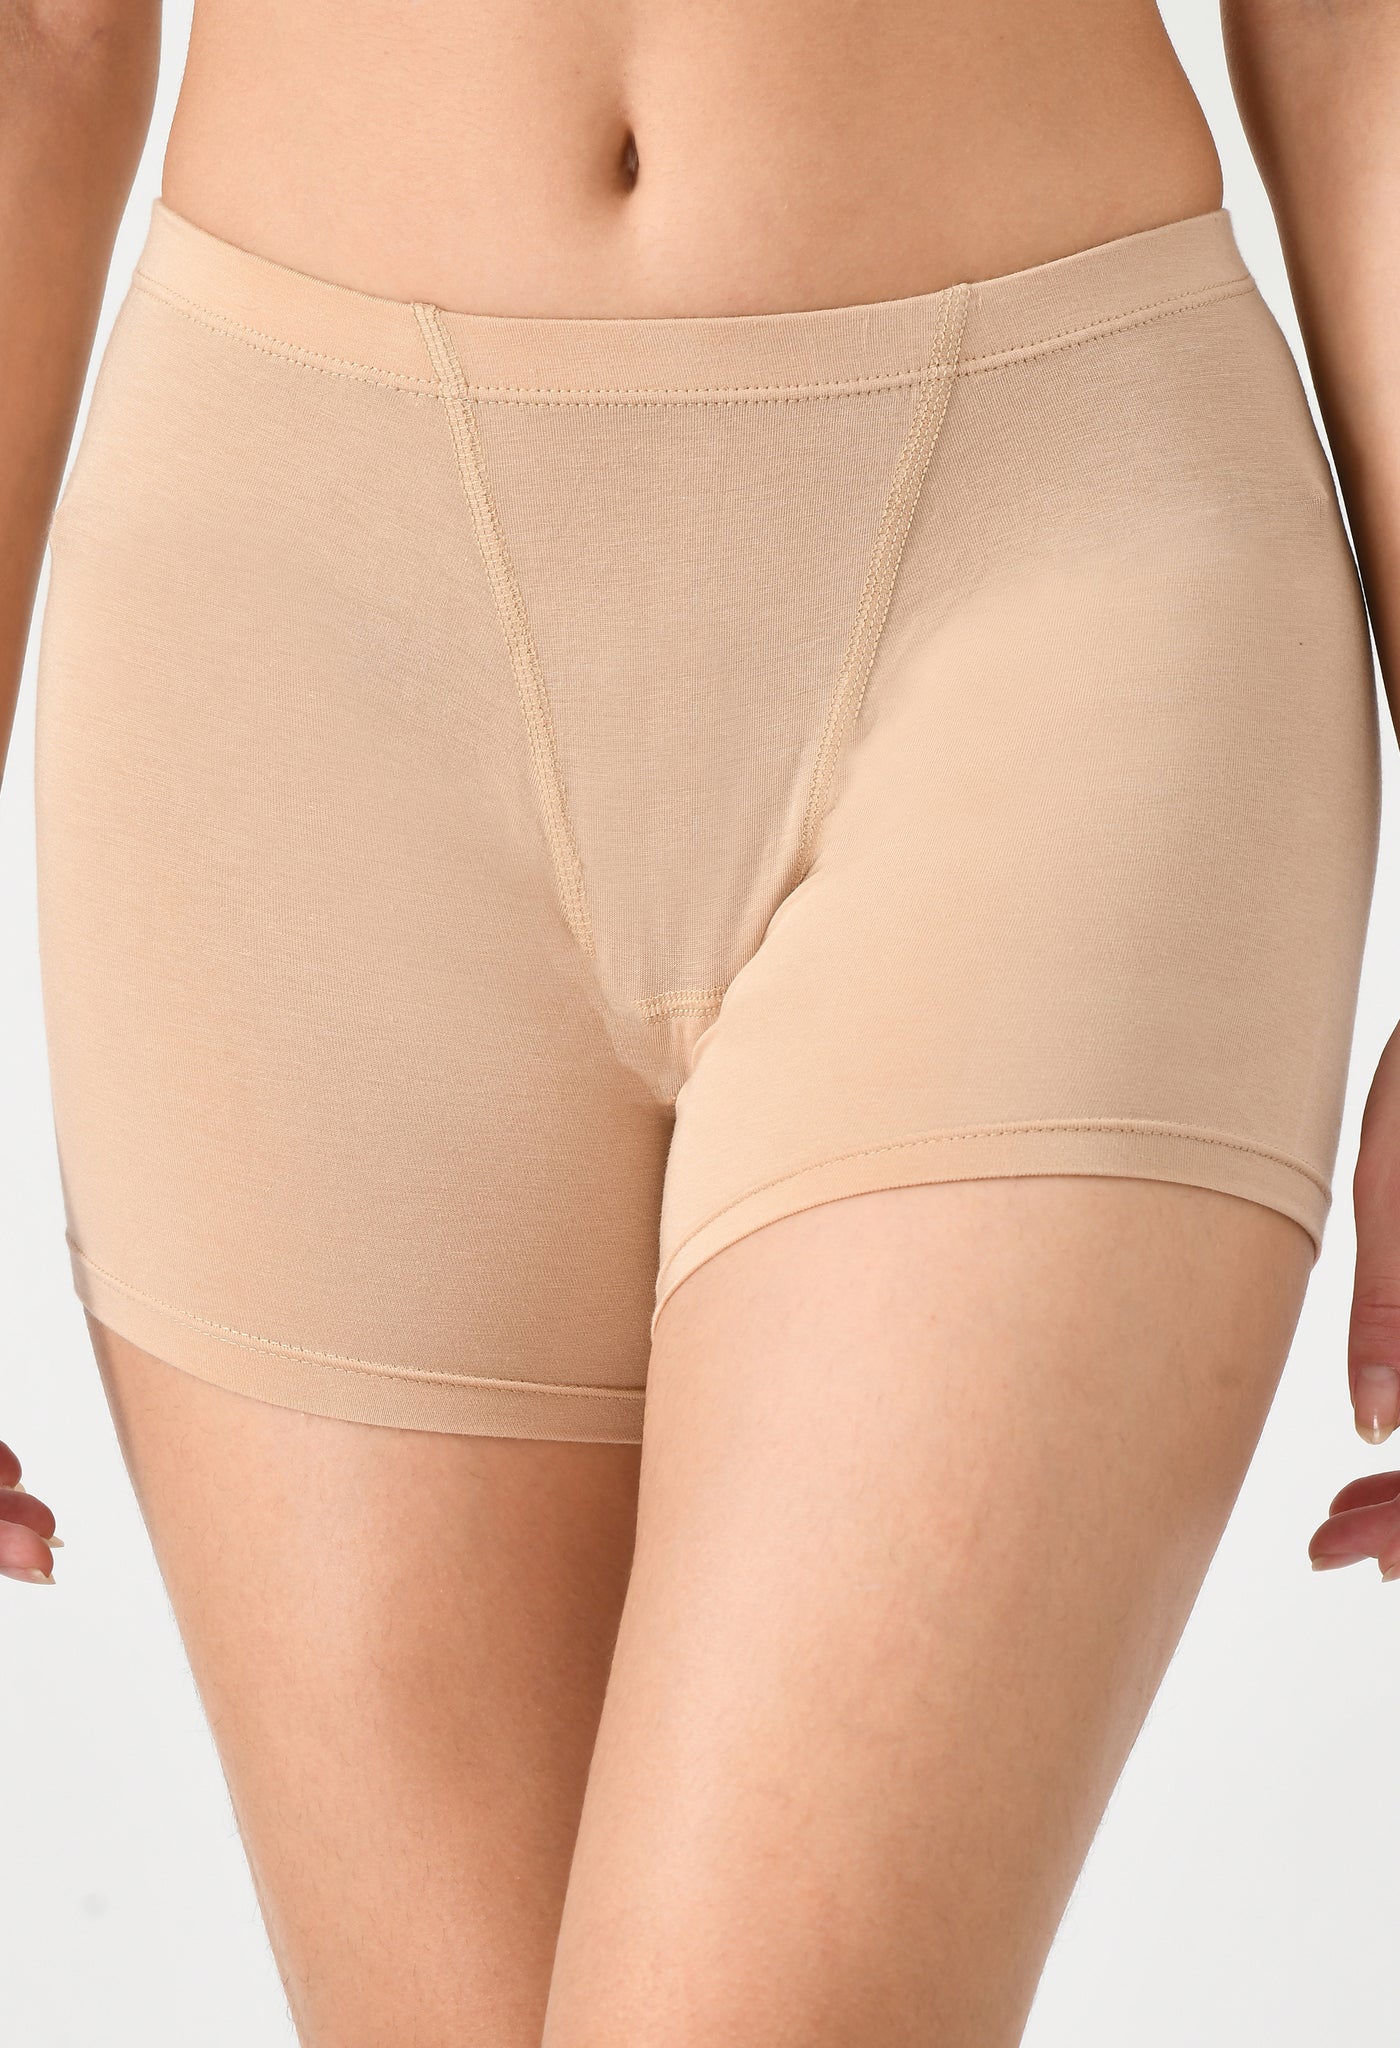 Siro Micro Modal Nude Dress Shorts